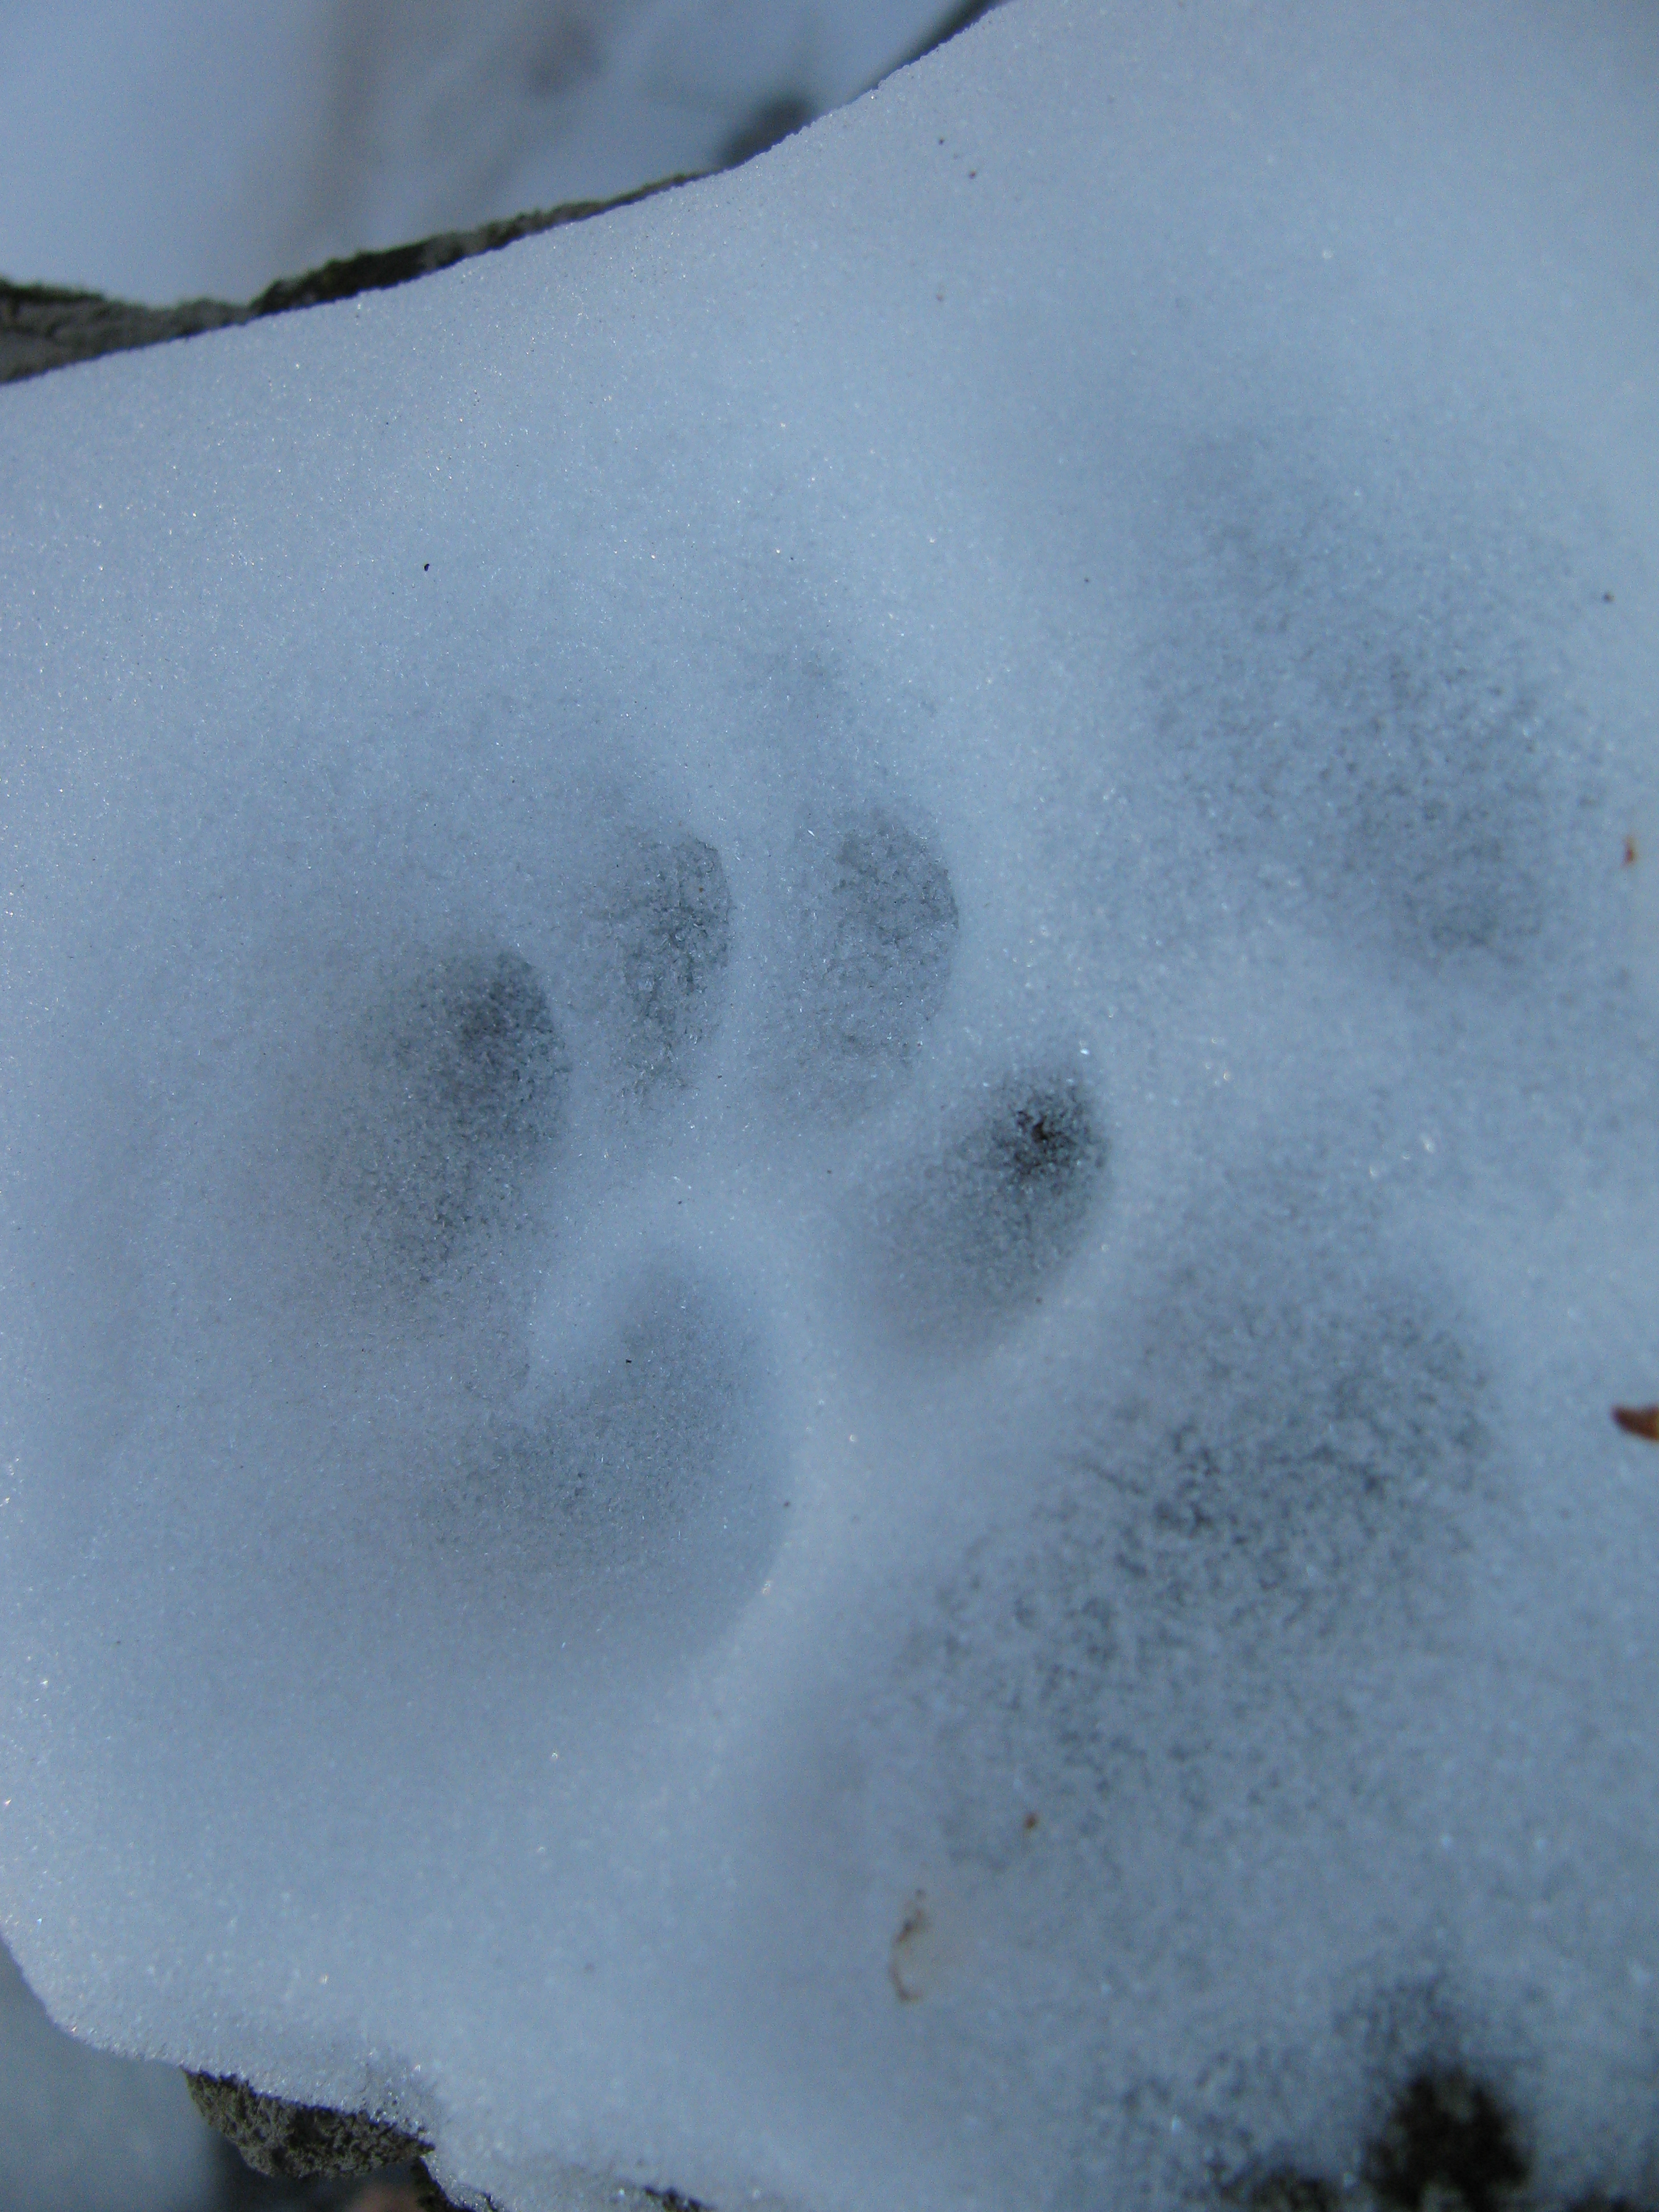 File:Bobcat track in snow.jpg - Wikimedia Commons